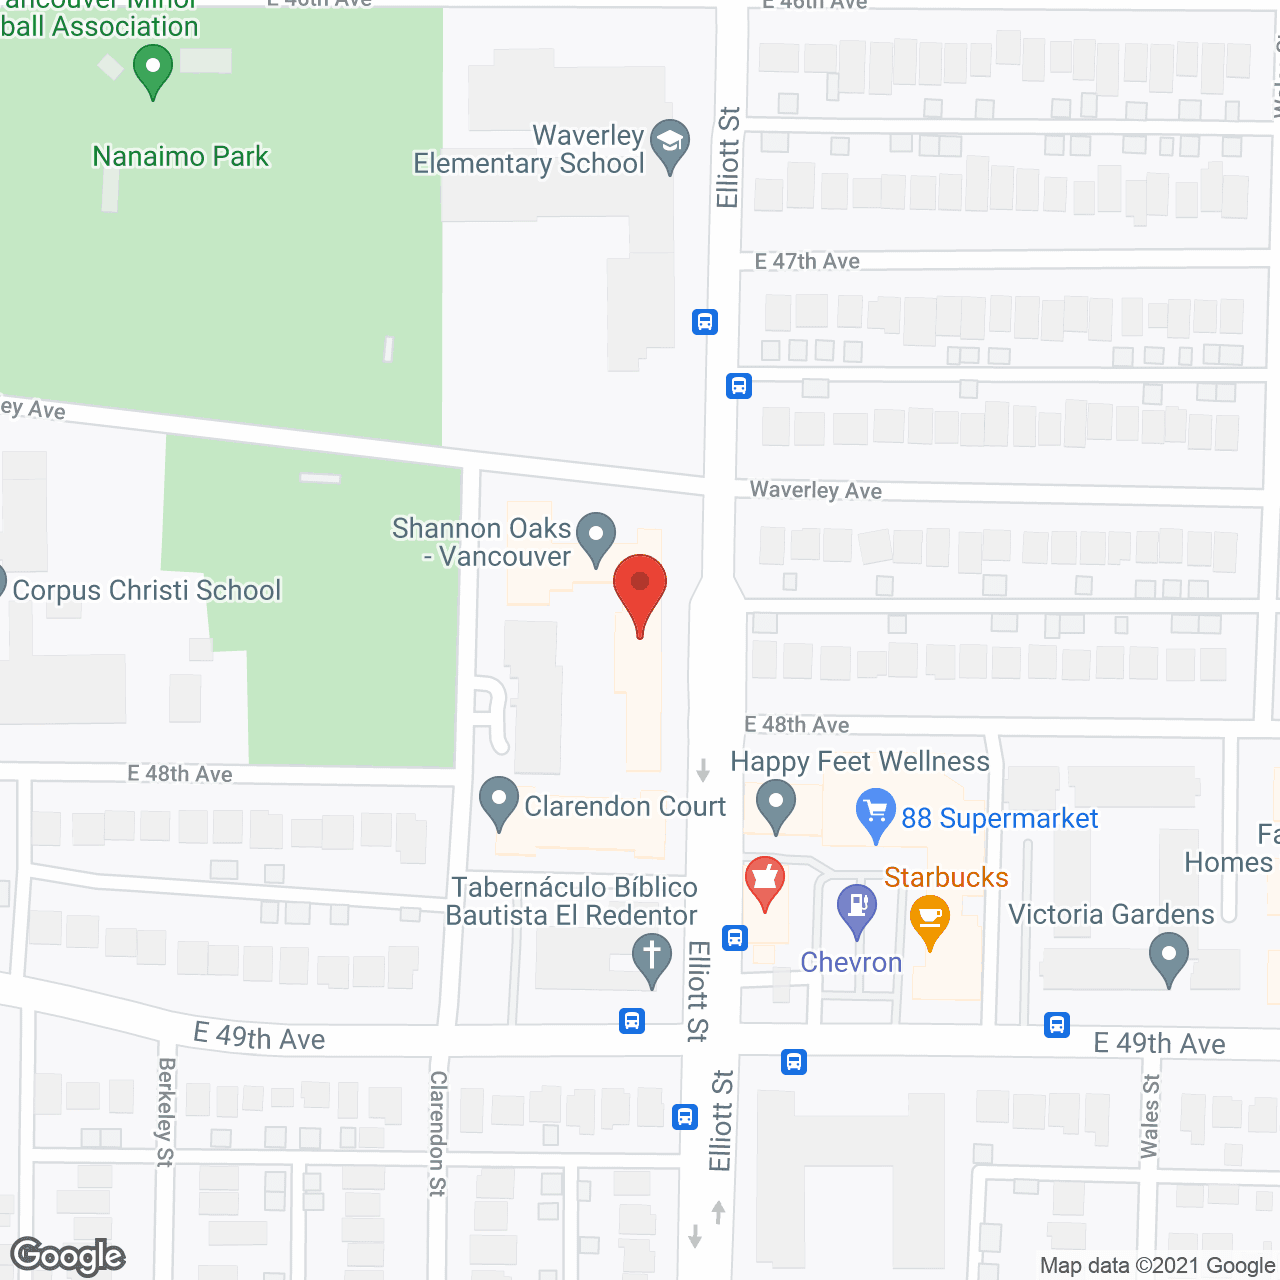 Shannon Oaks-Vancouver in google map